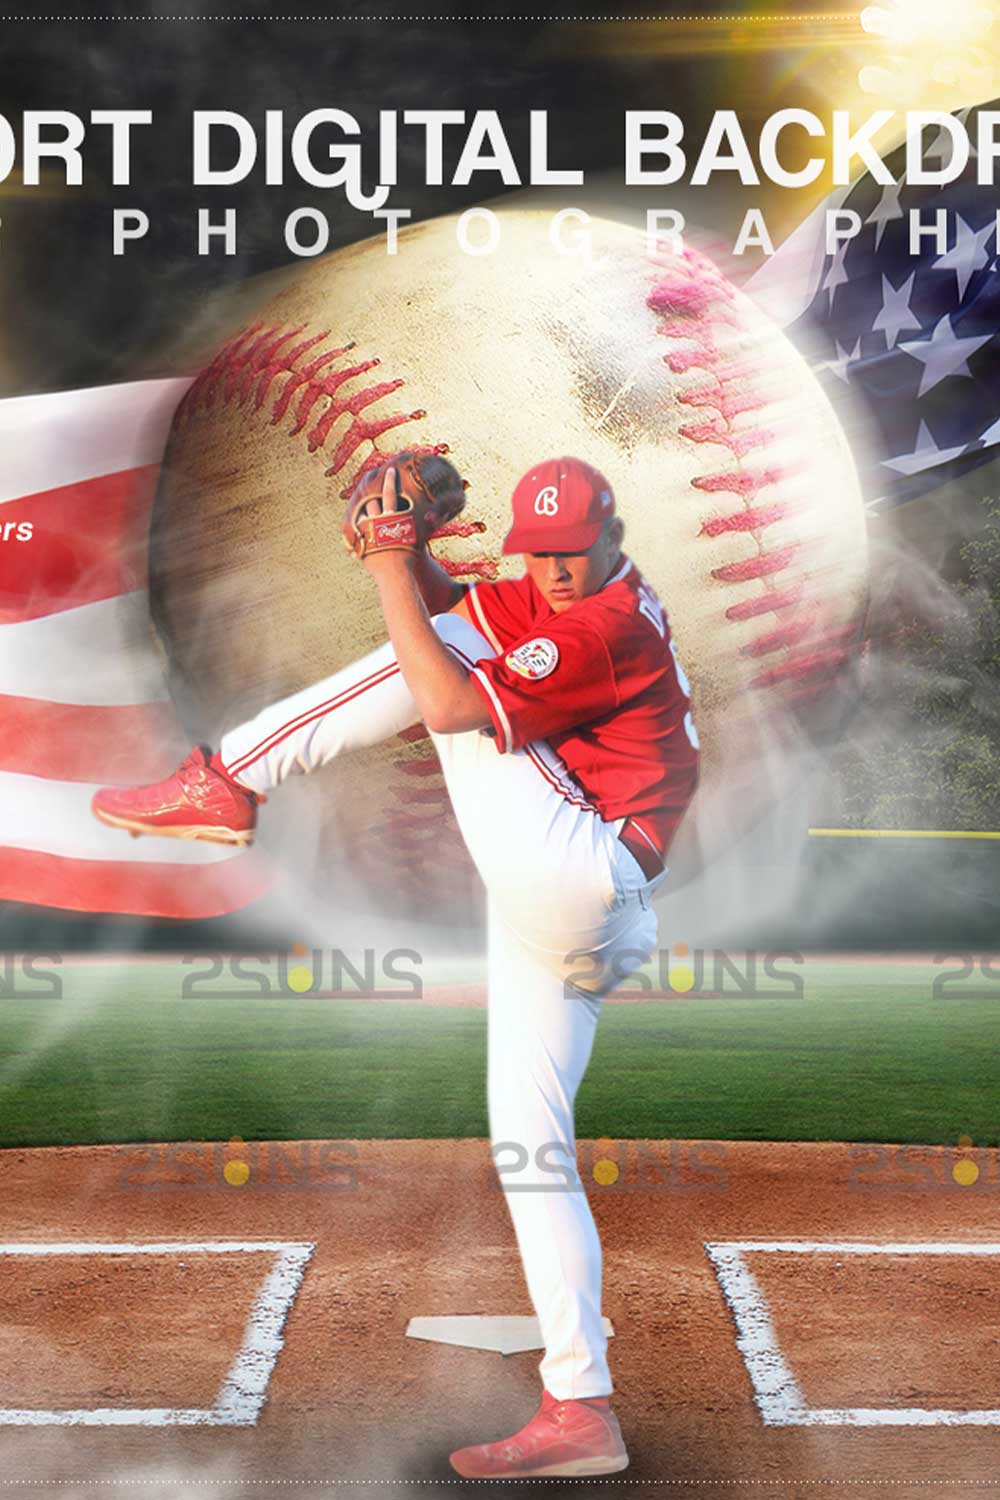 Baseball American Flag Backdrop Sports Digital Photoshop Overlay Pinterest Image.